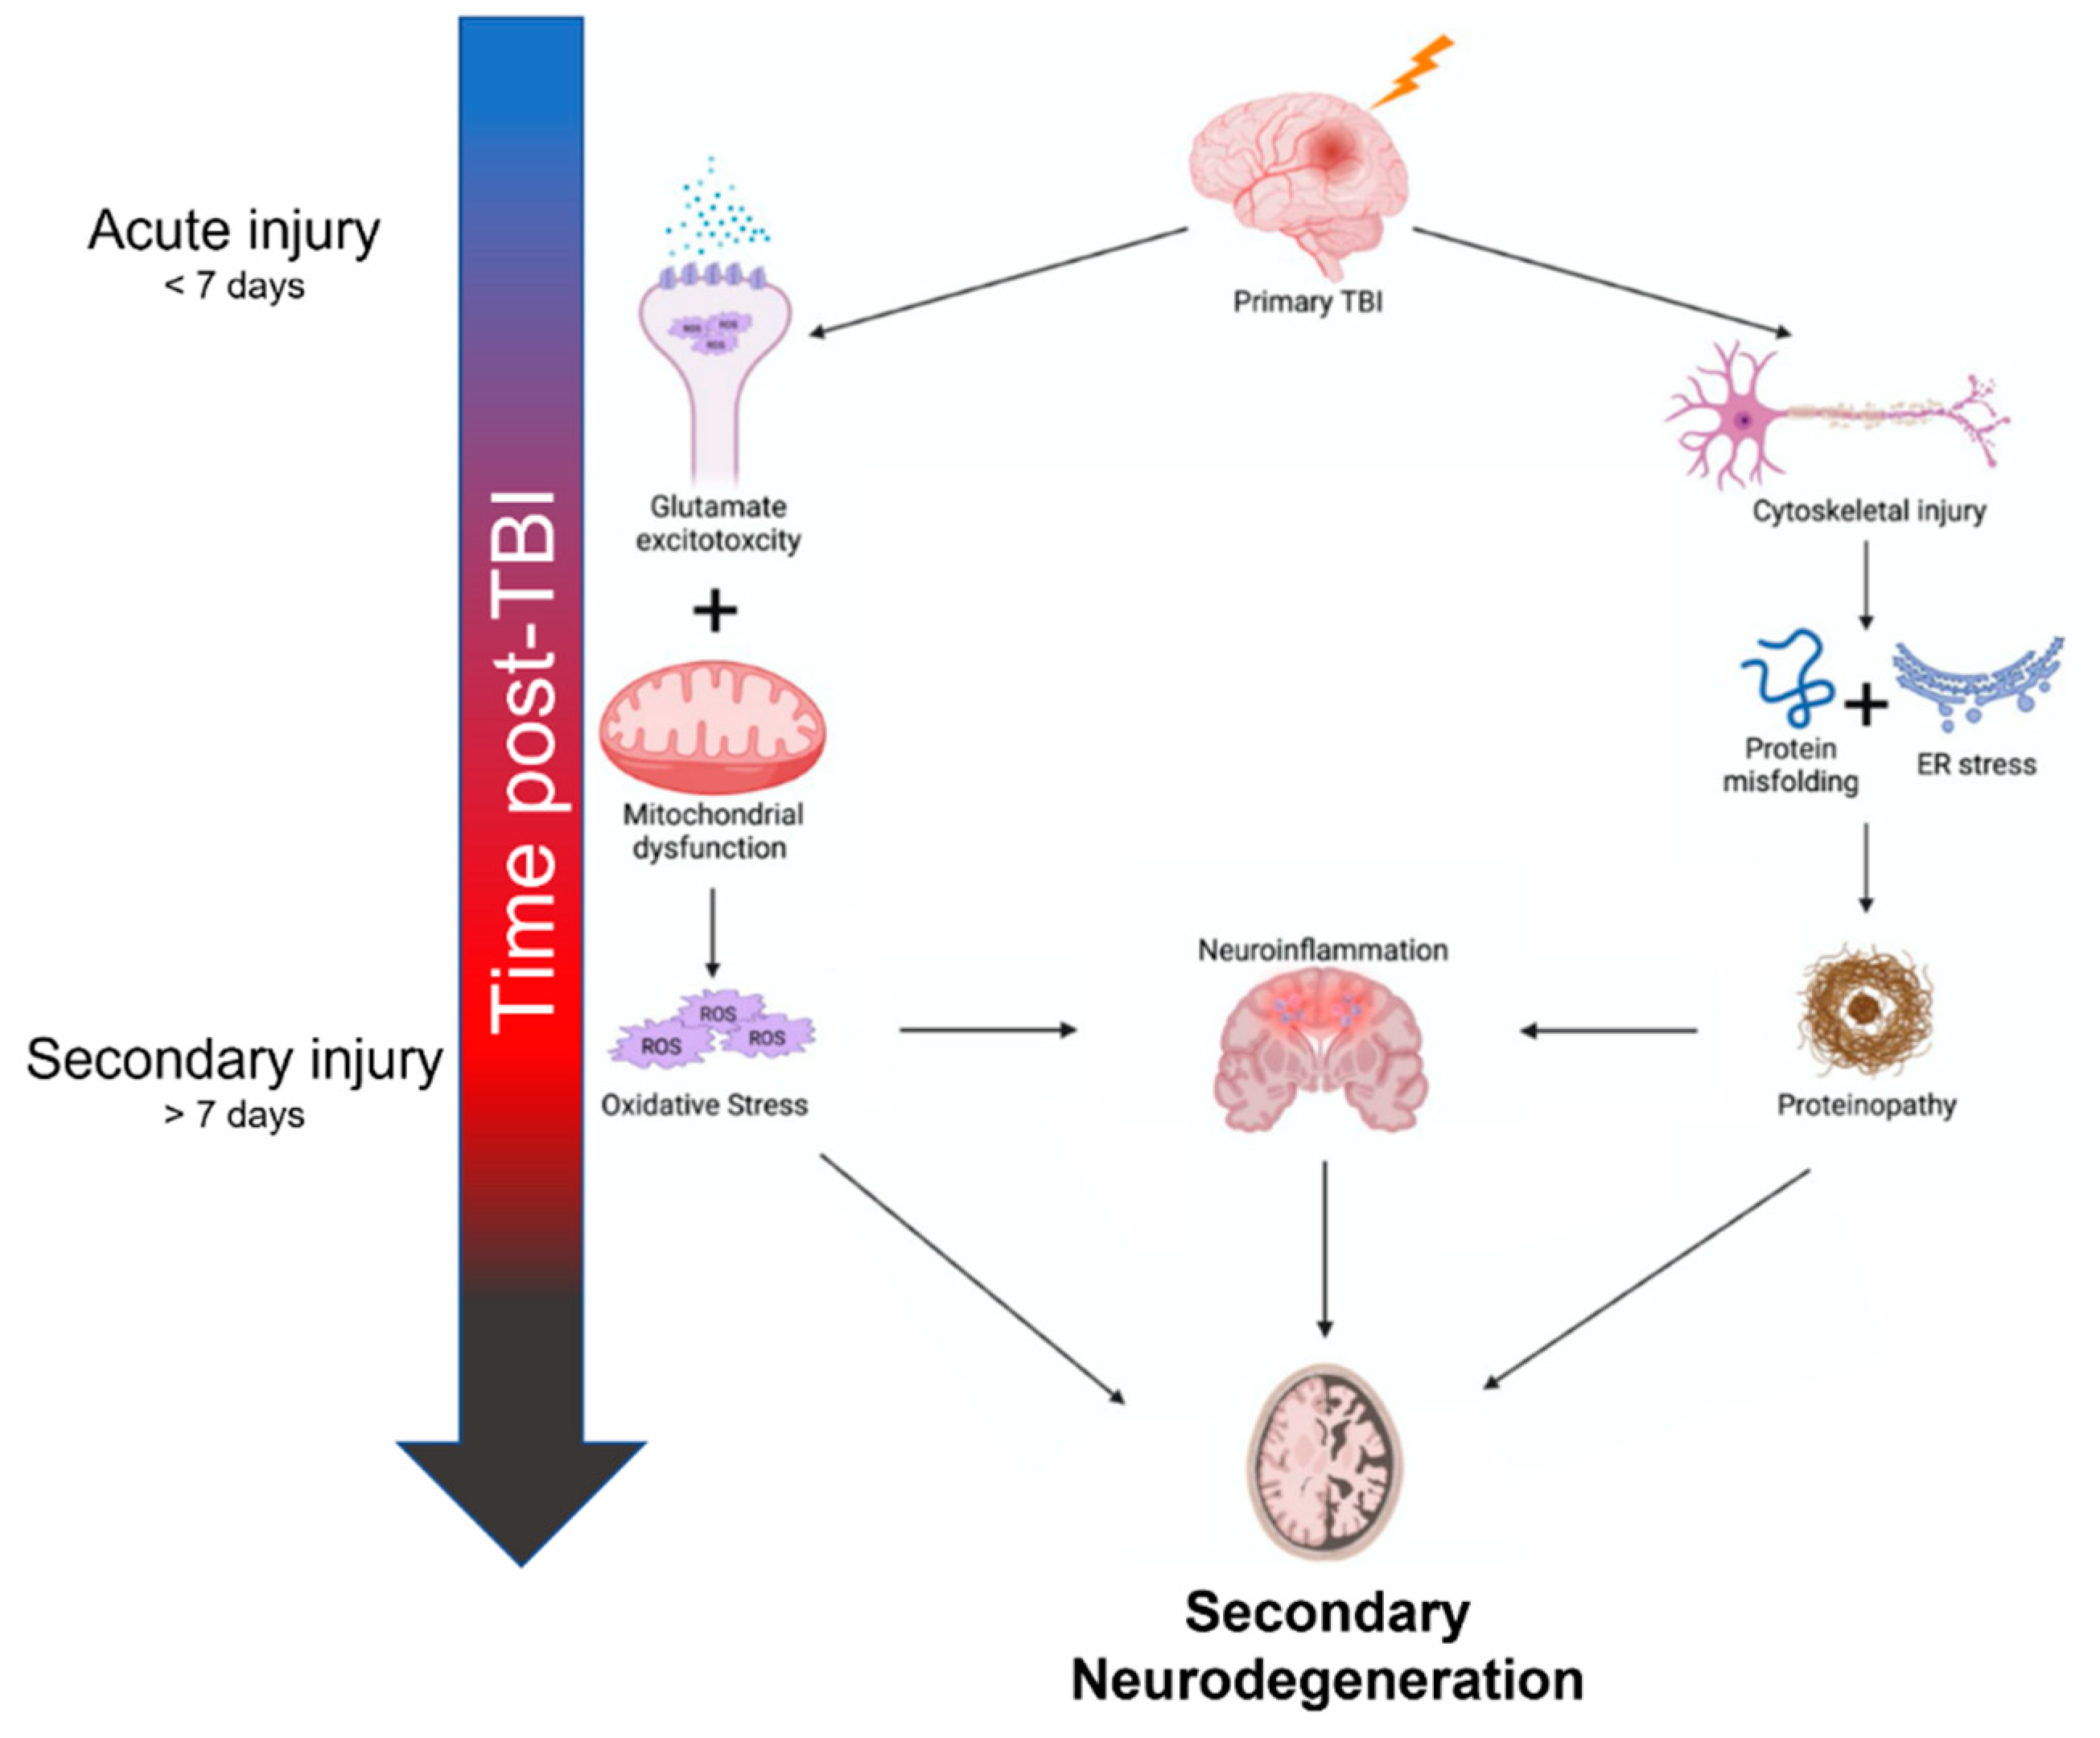 Assessment of neuroendocrine dysfunction following traumatic brain injury.